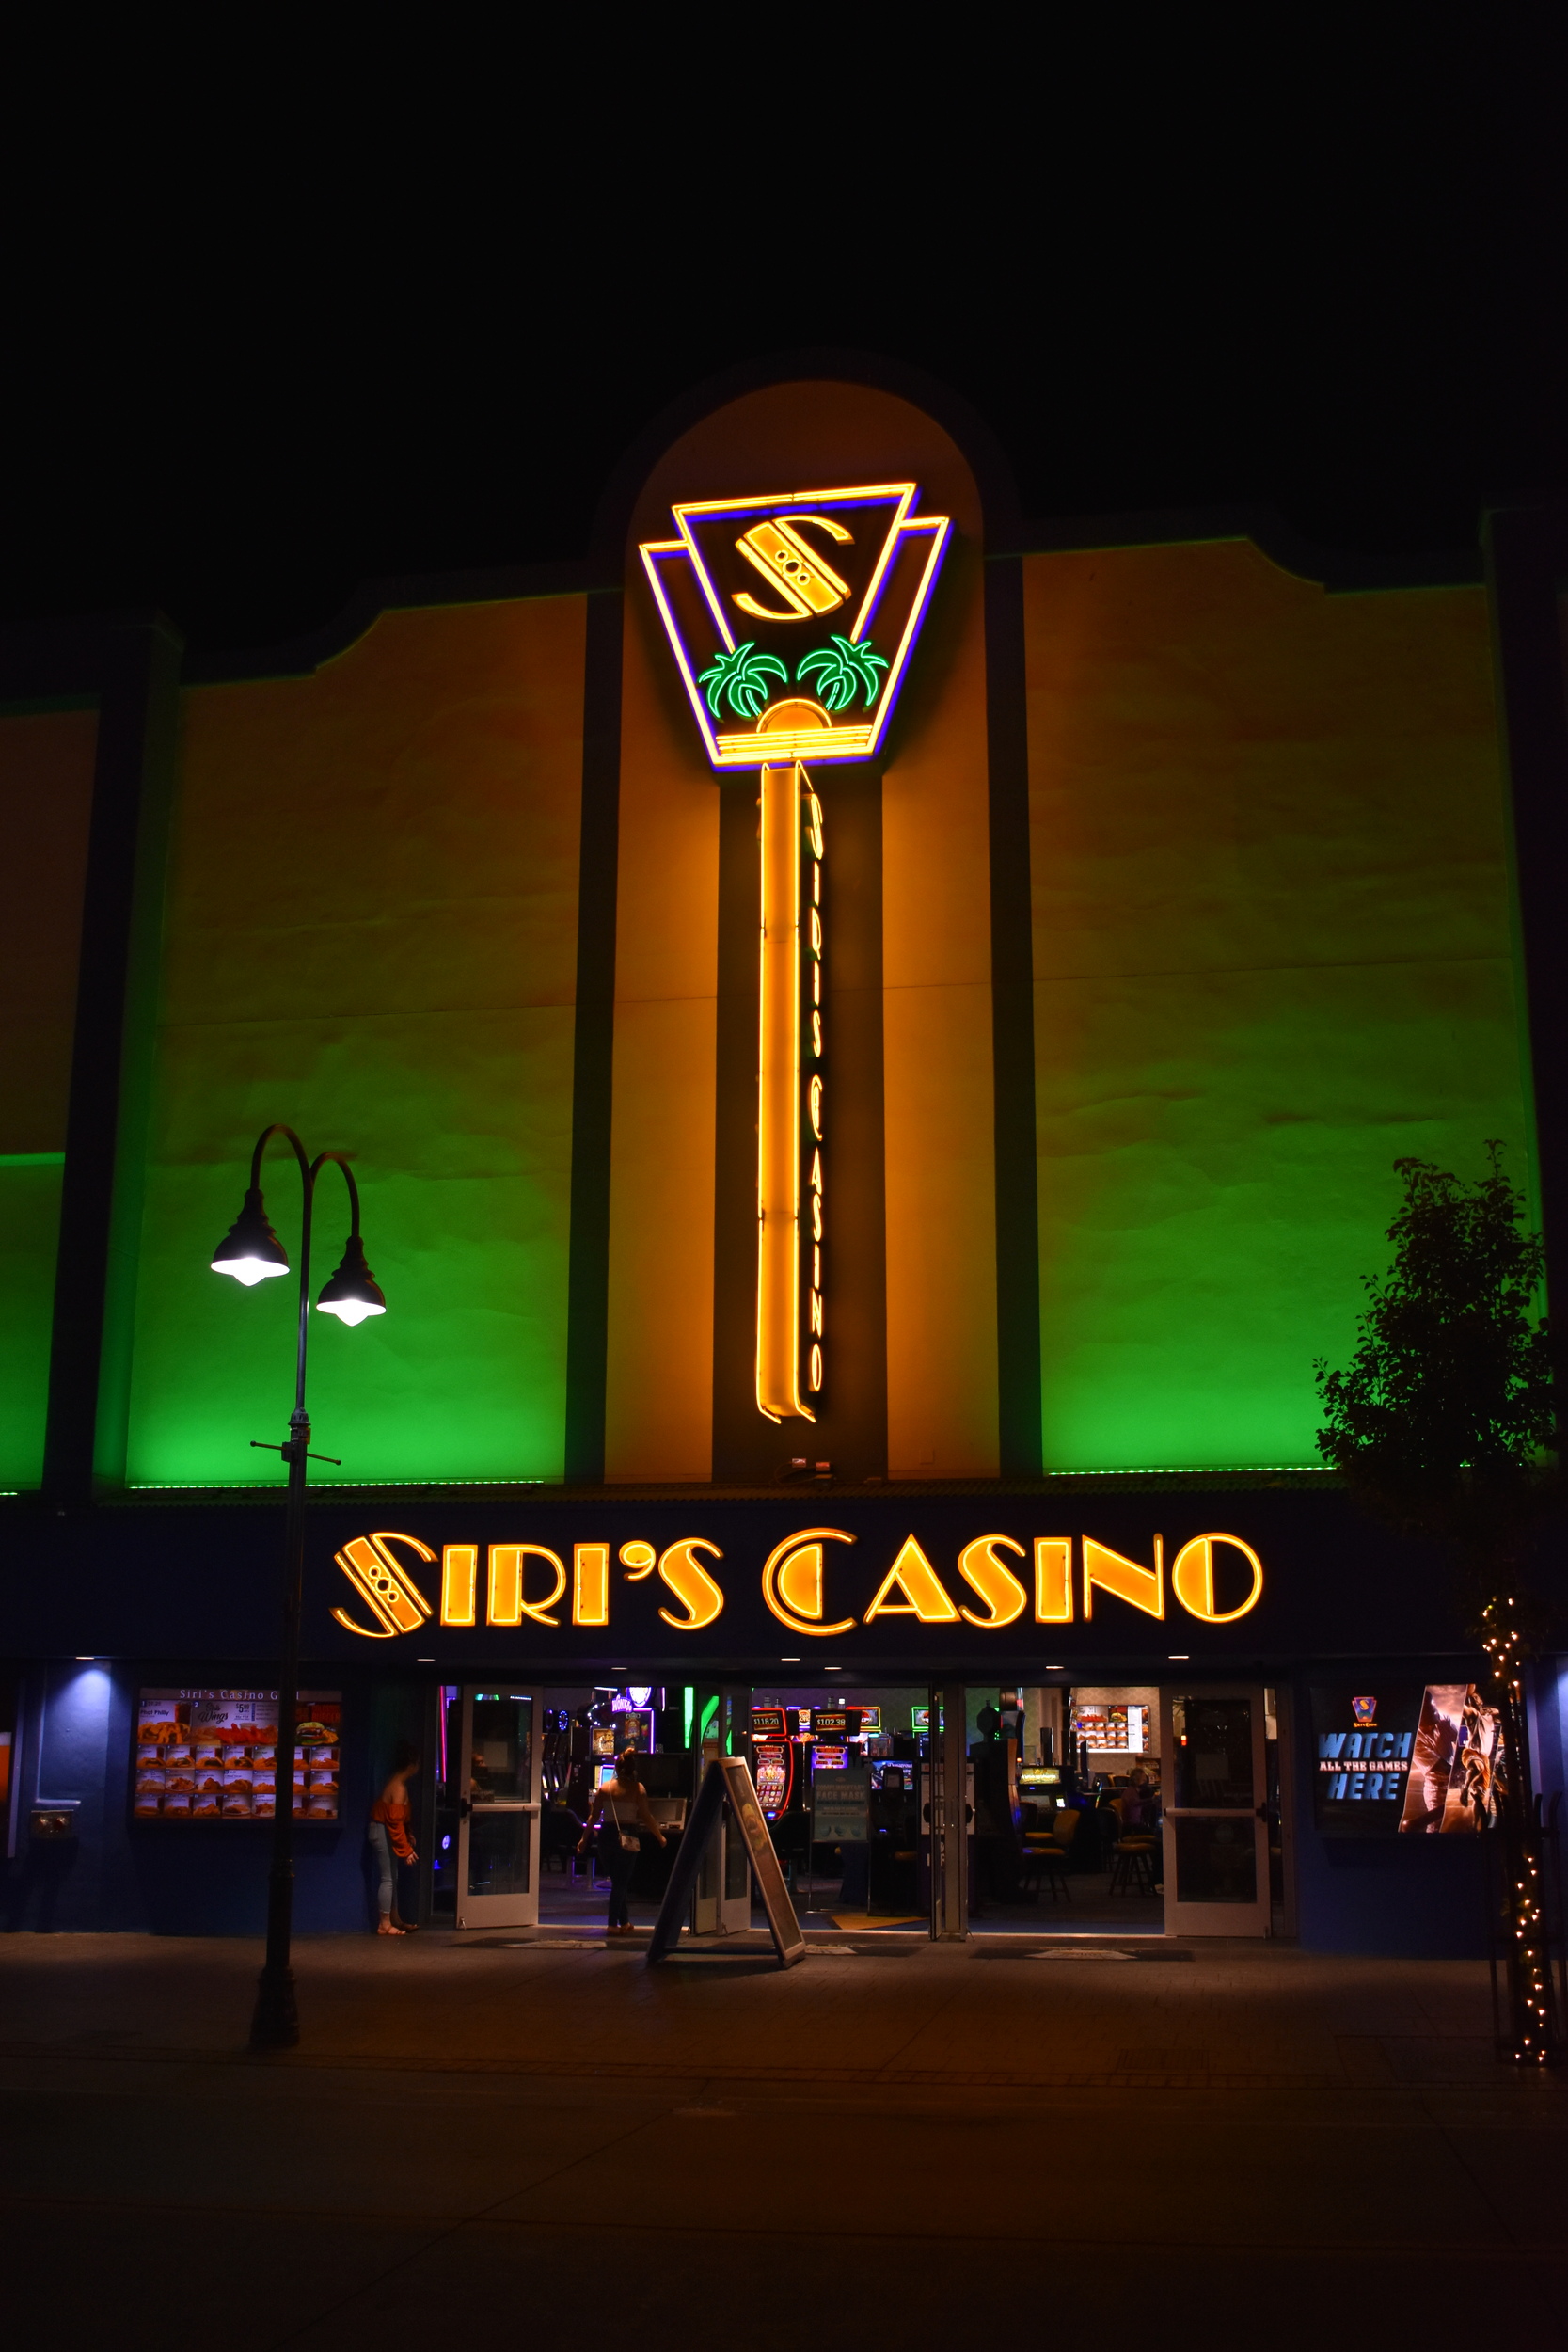 Siri's Casino wall mounted signs, Reno, Nevada